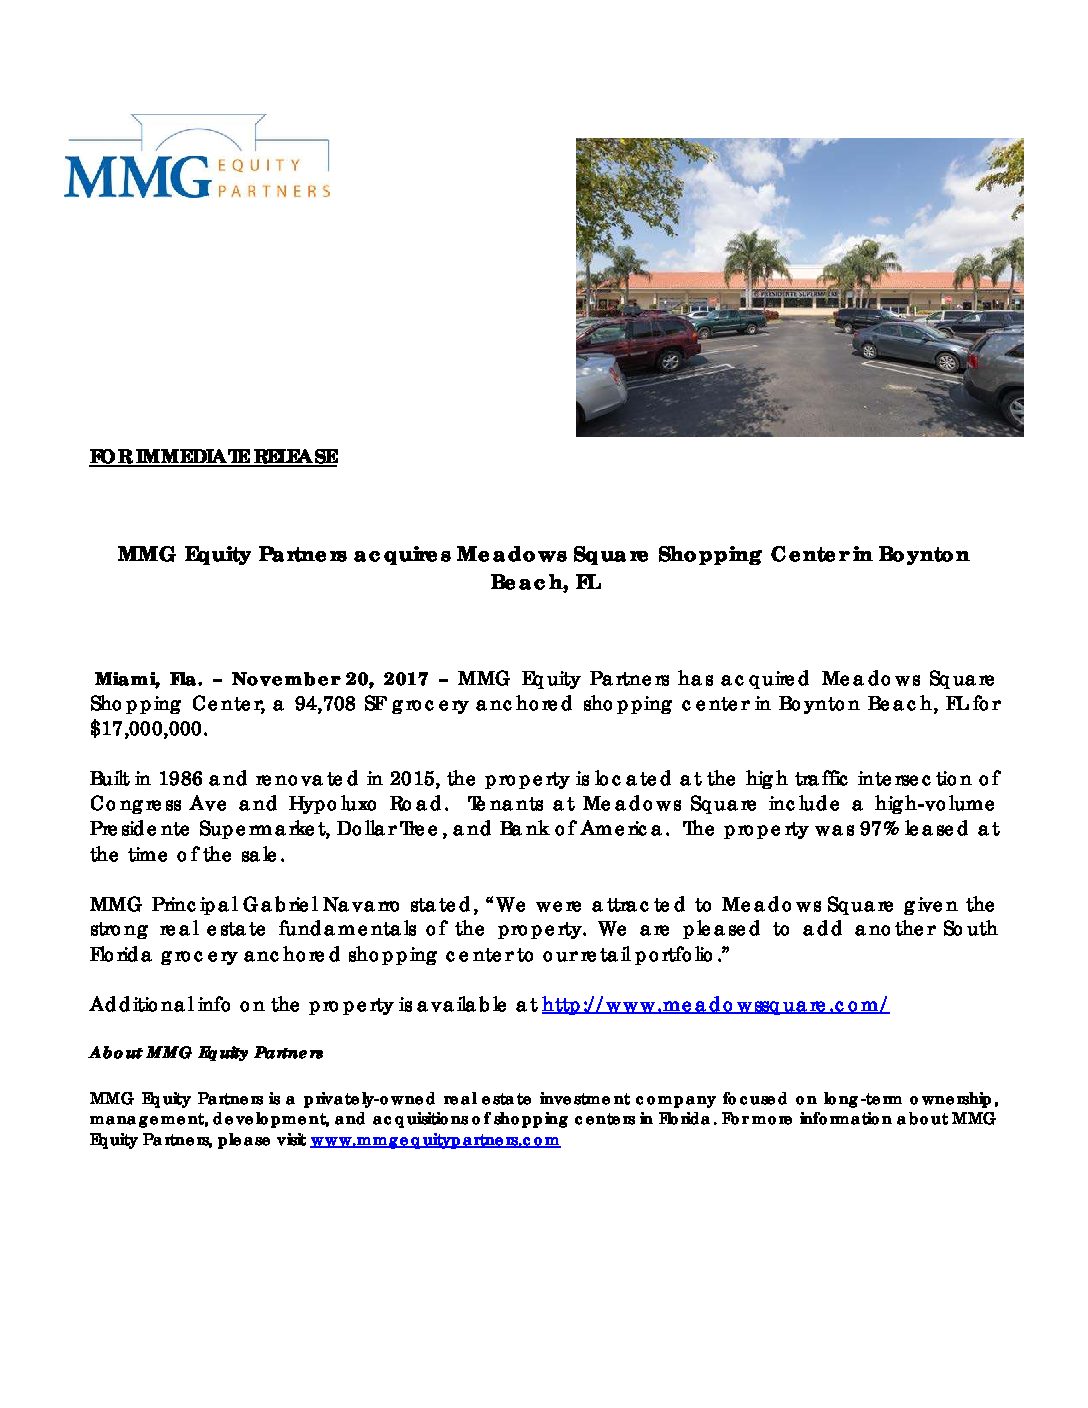 PR – MMG Acquires Meadows Square Shopping Center in Boytnon Beach for $17M